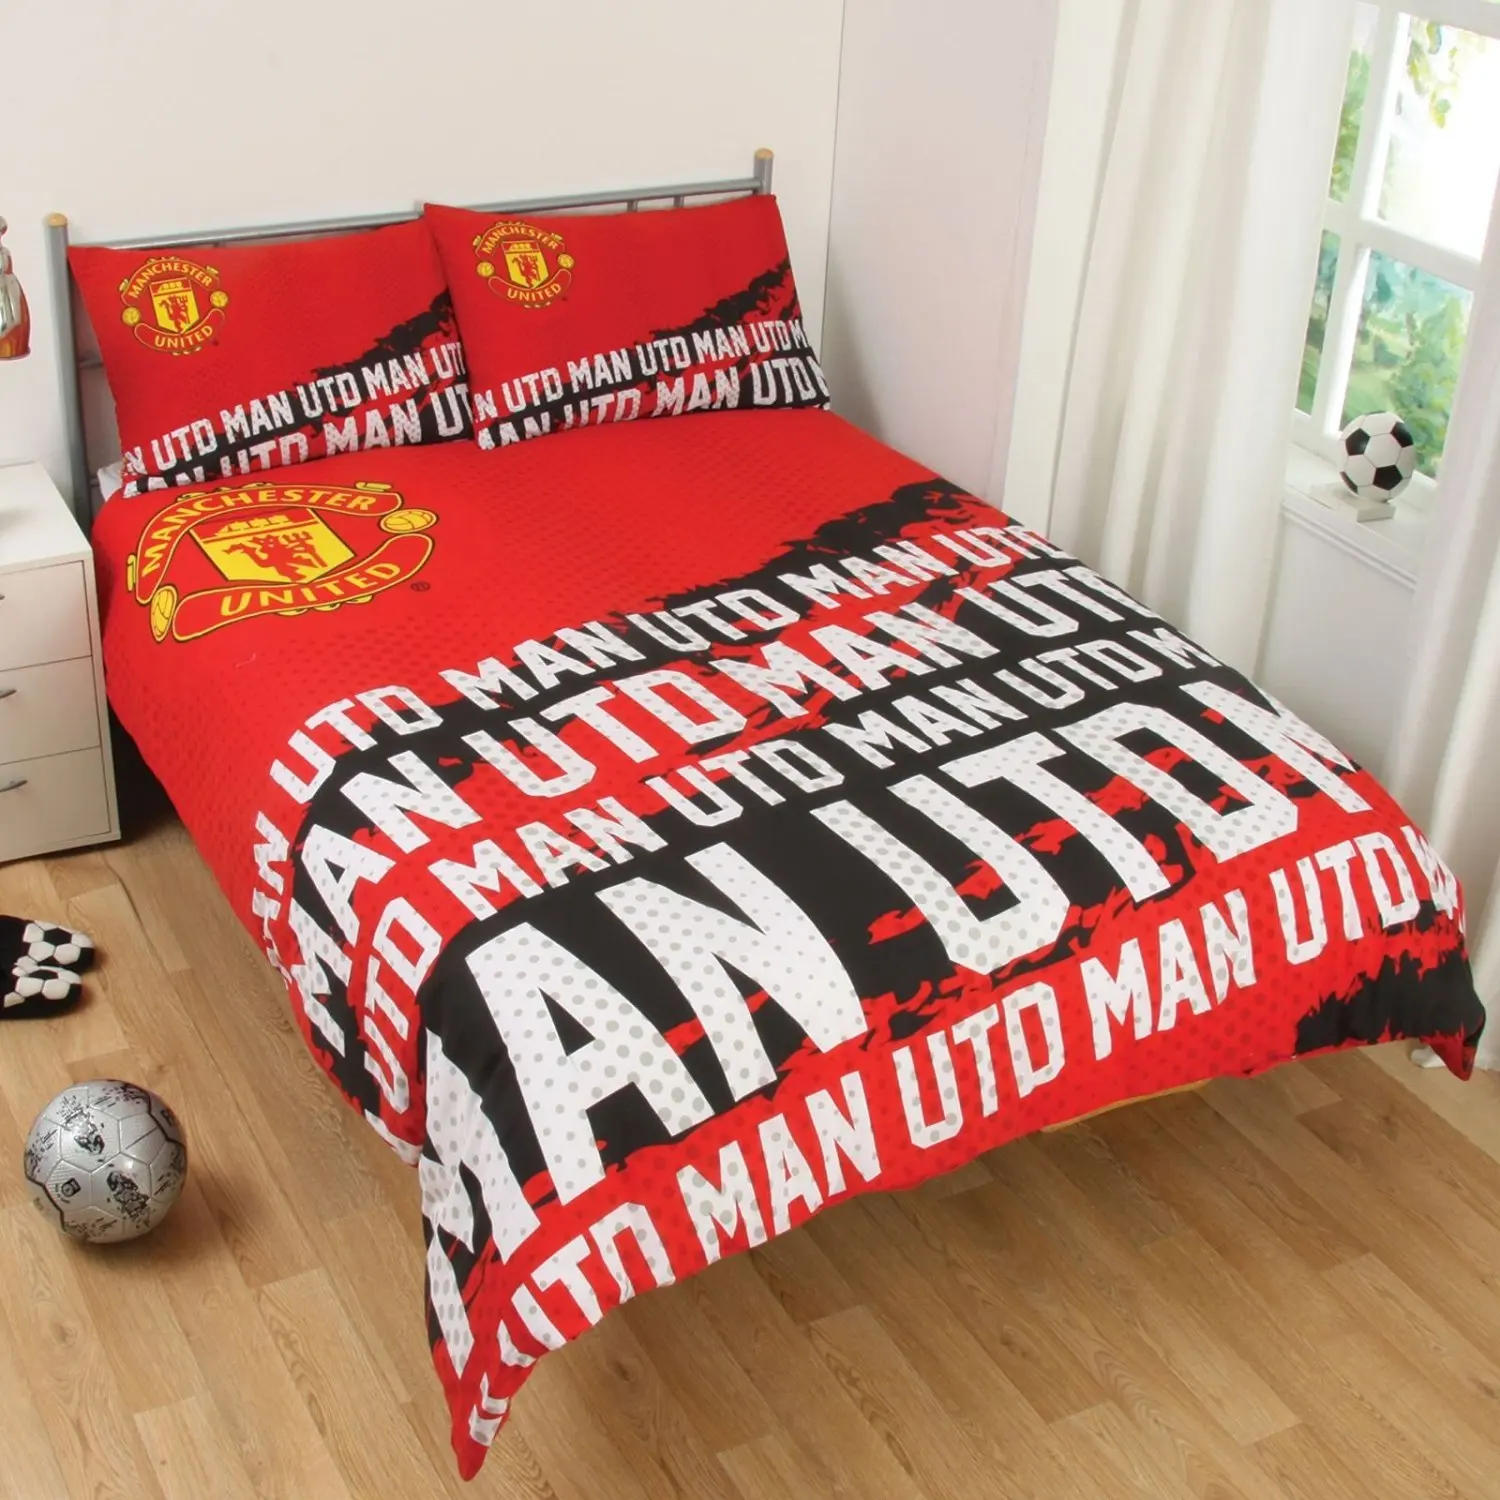 Manchester United Fc Patch Single Duvet Cover Set New Man Utd